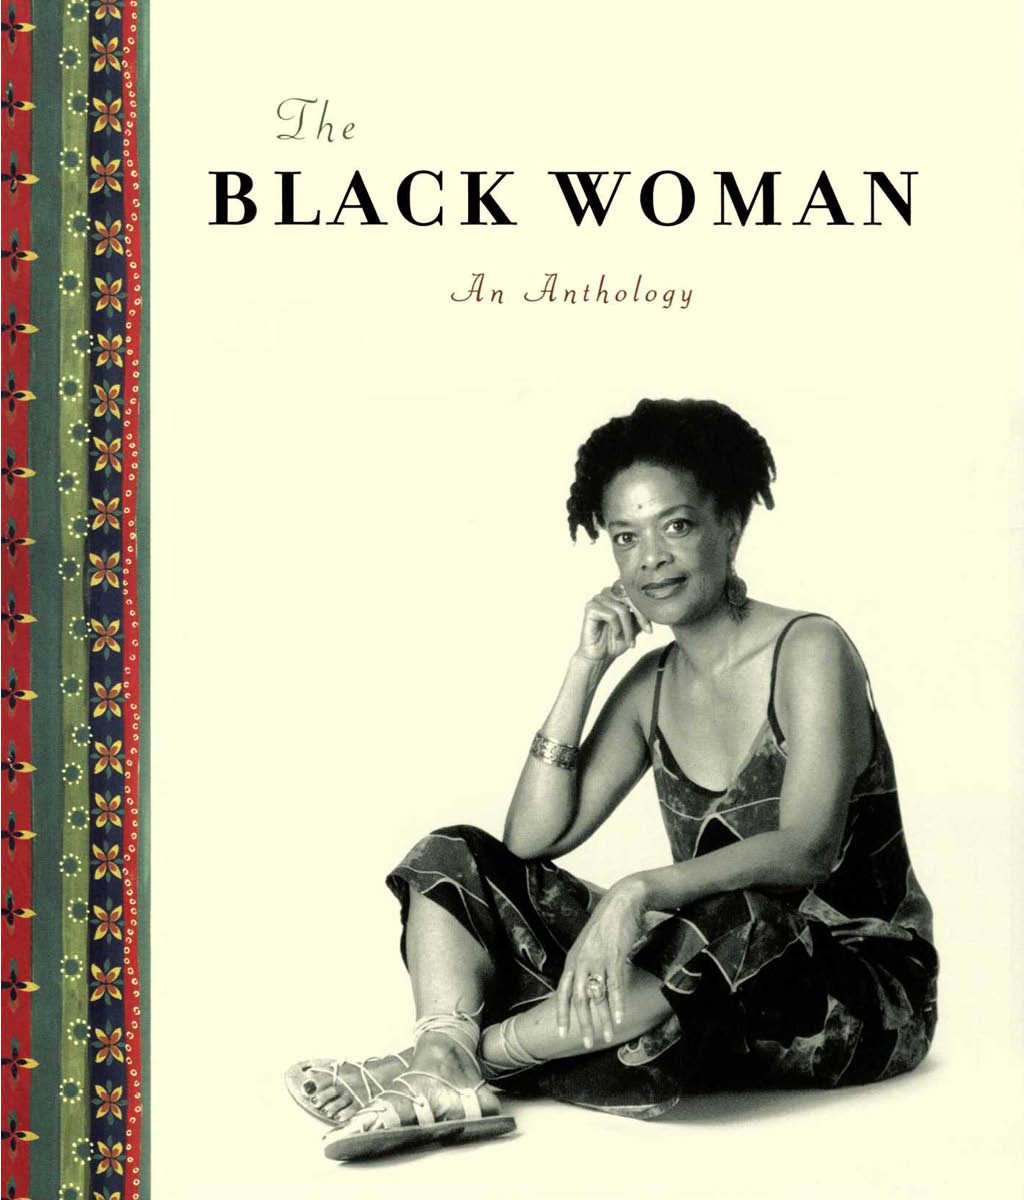 The Black Woman by Toni Cade Bambara